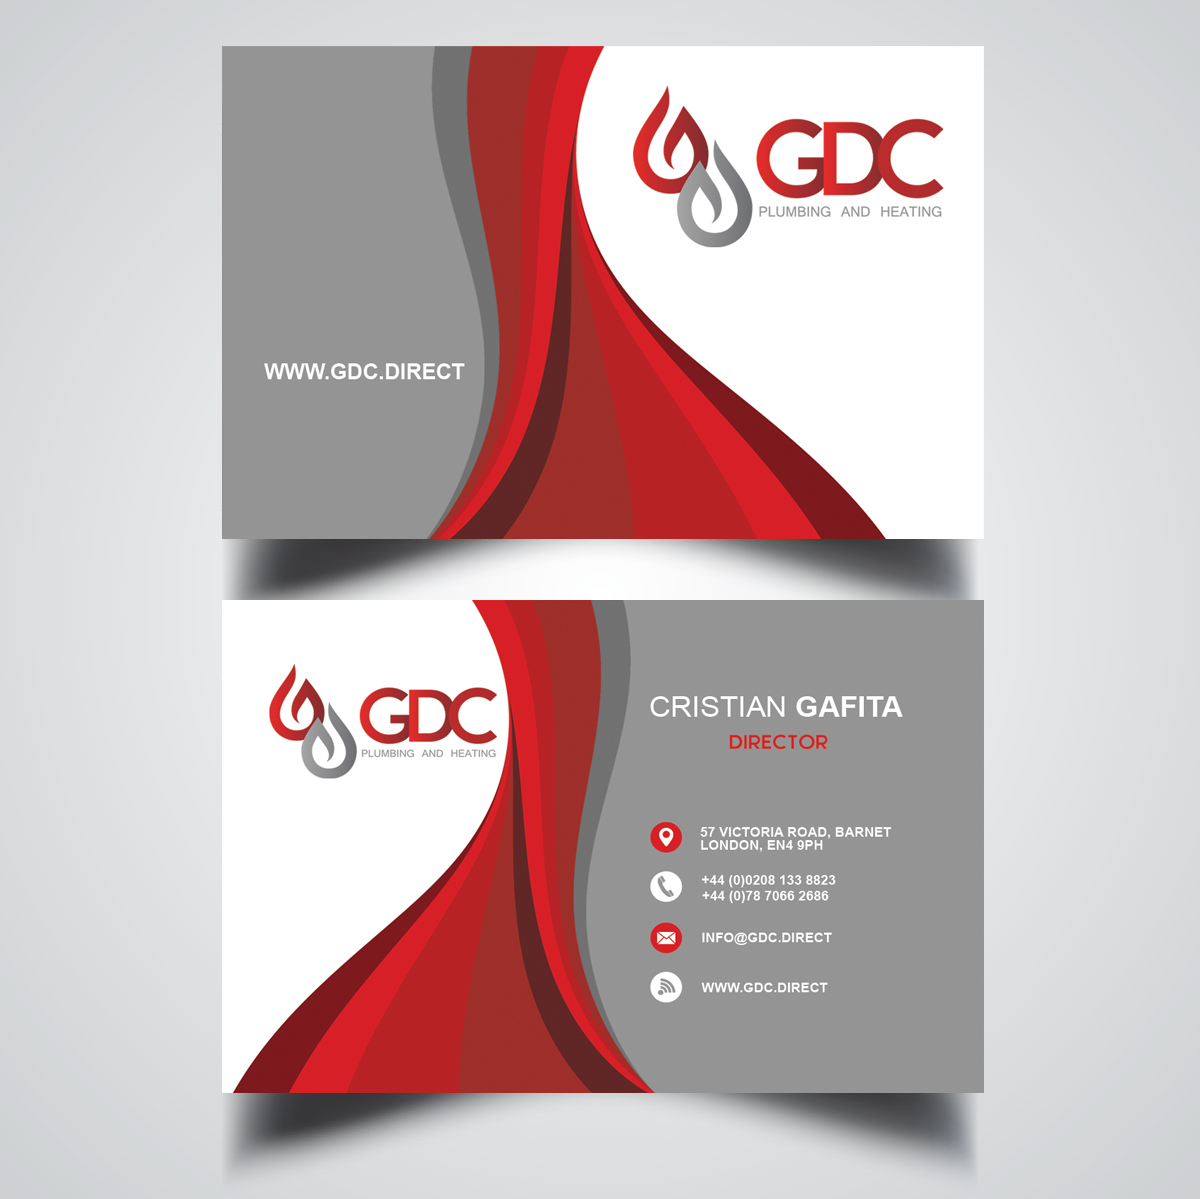 GDC Plumbing and Heating Ltd